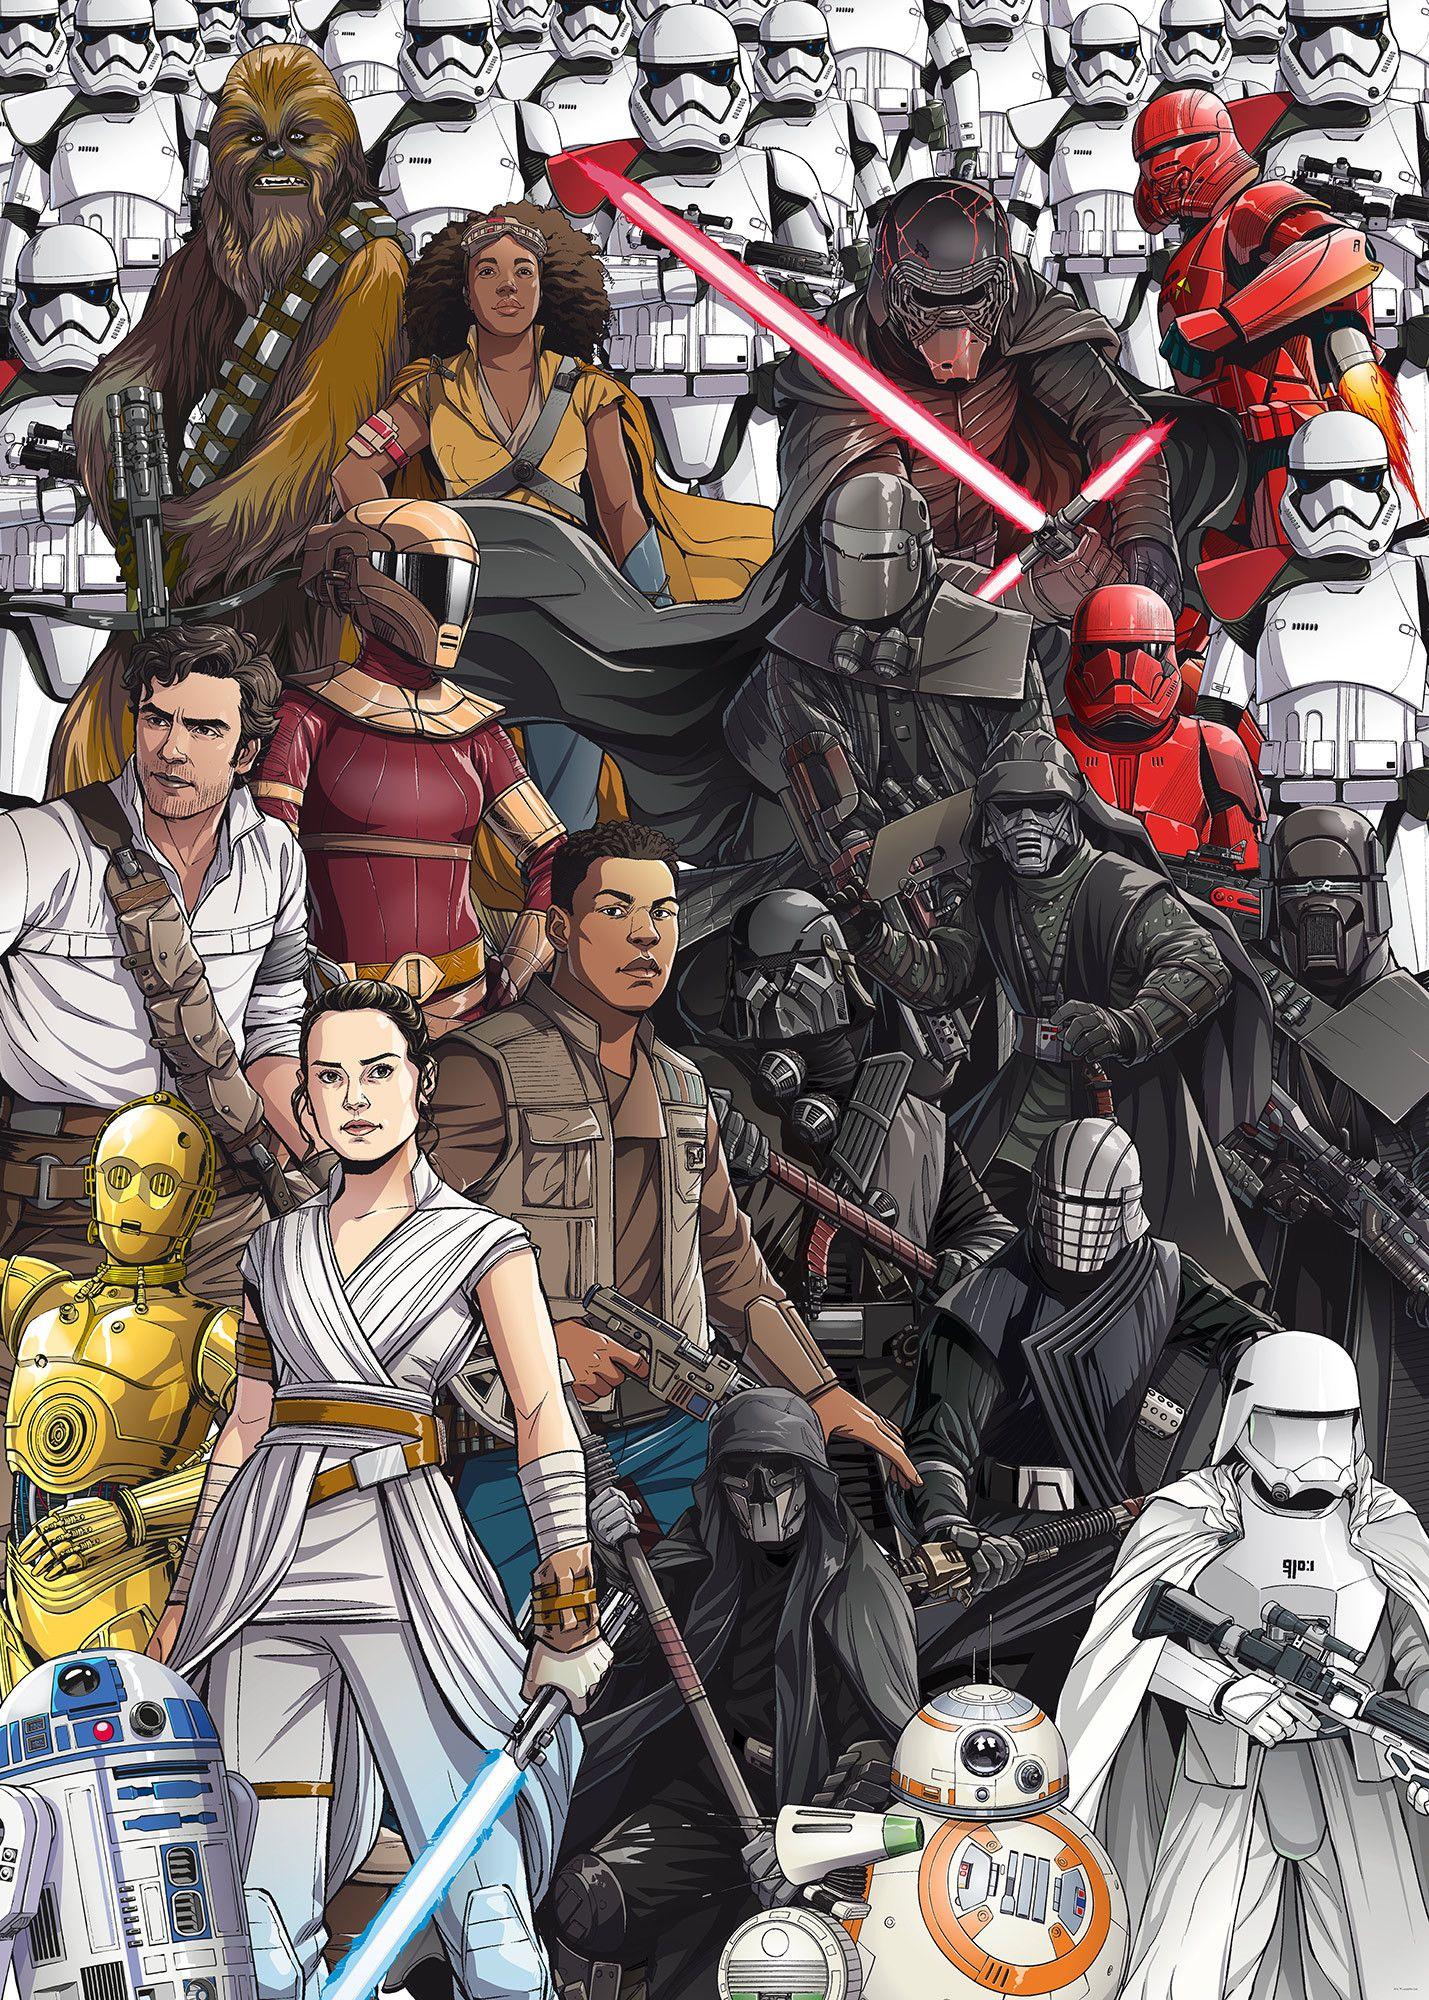 star wars cartoon characters wallpaper